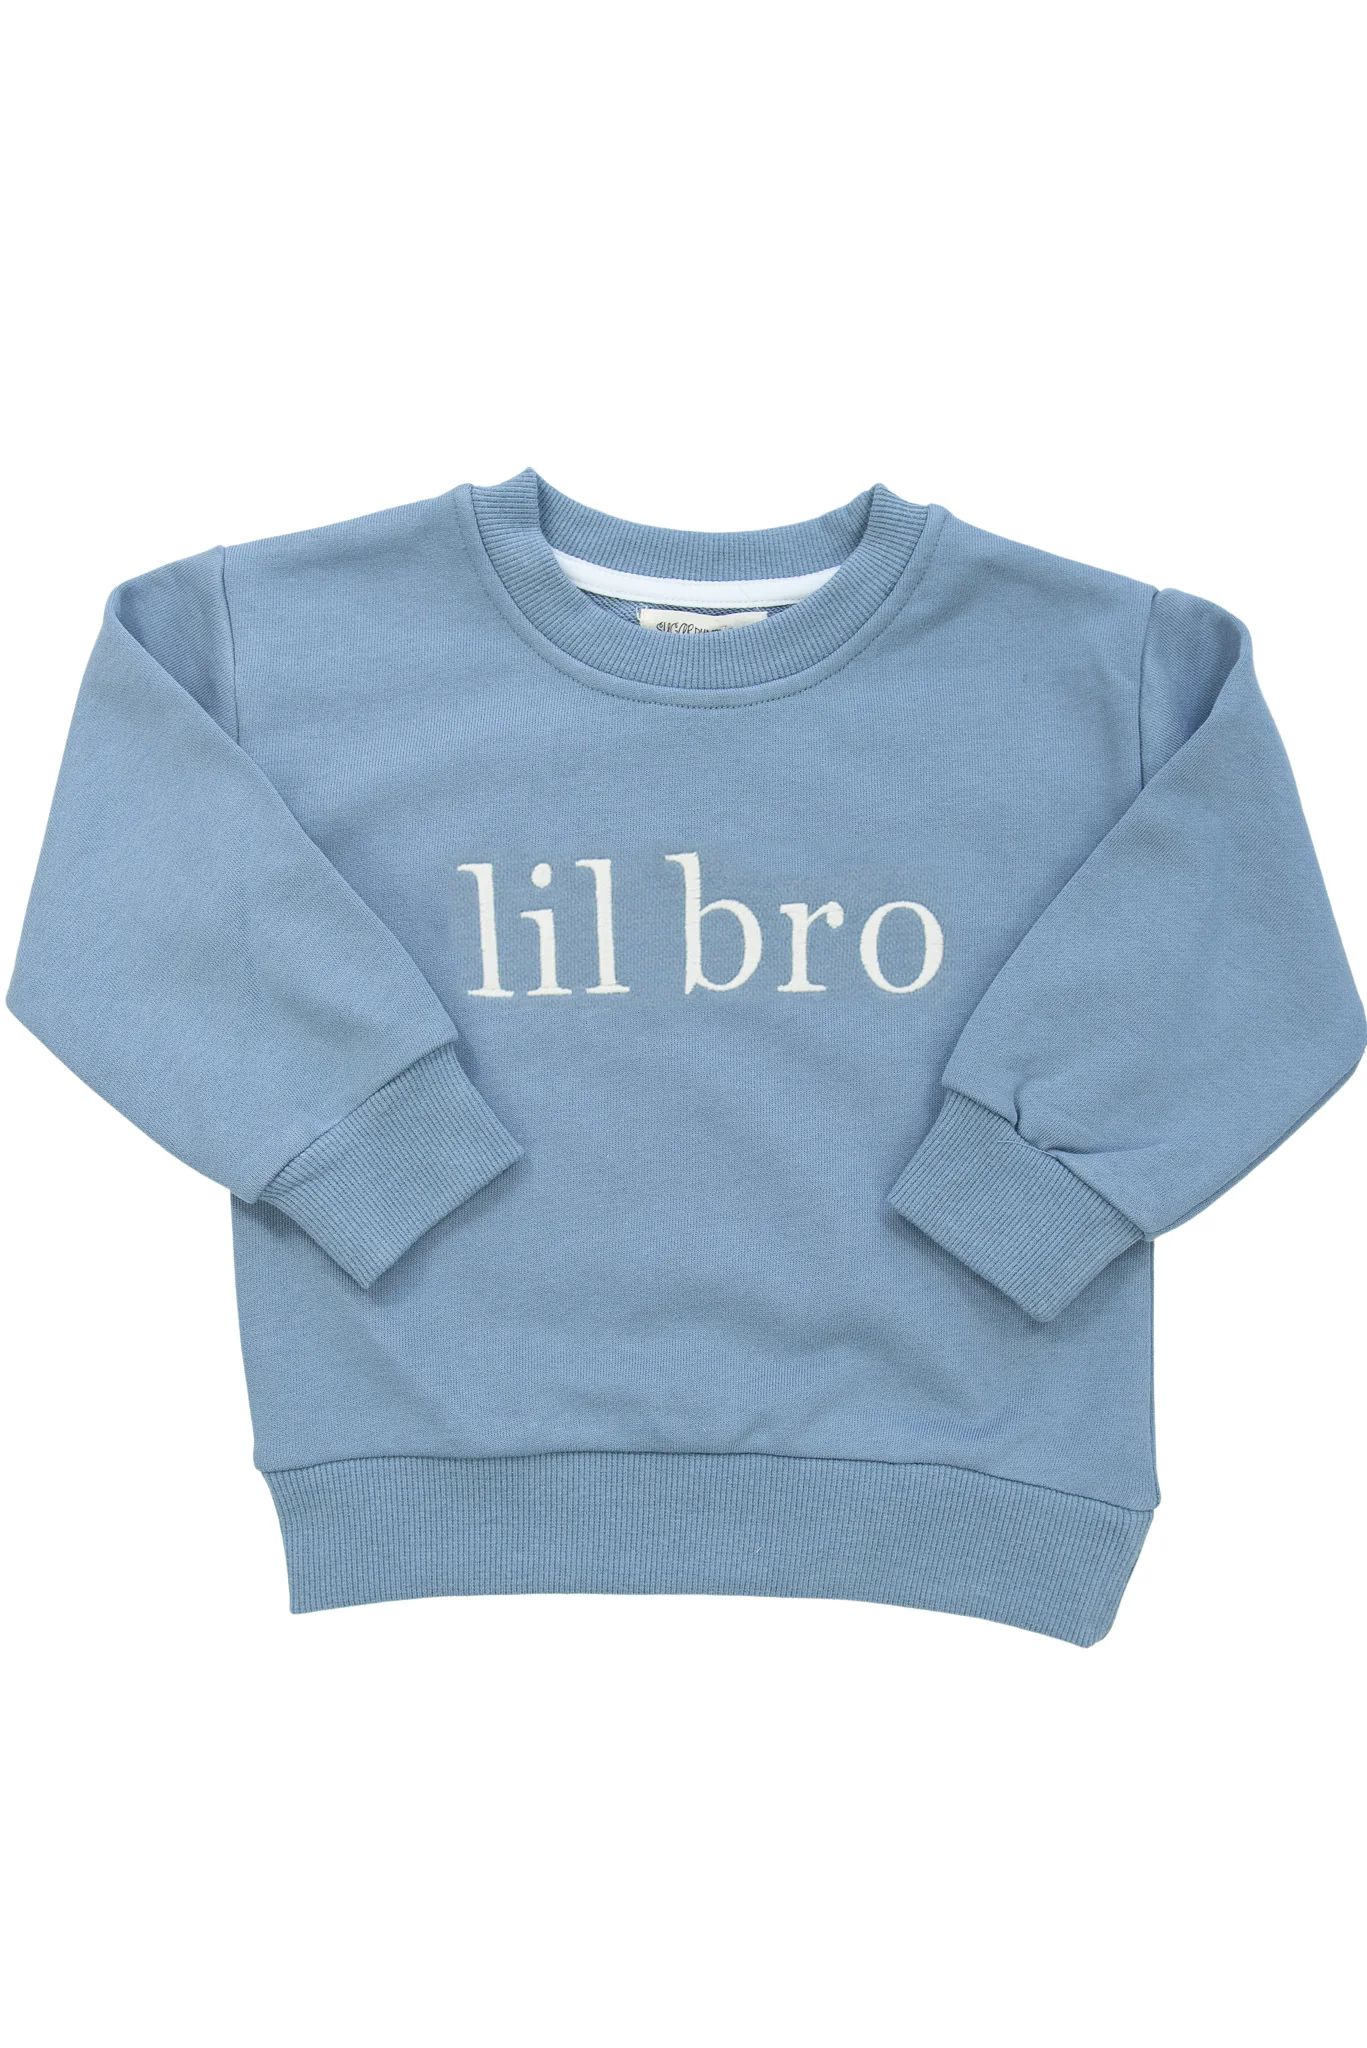 Boys Lil Bro Sweatshirt | Sugar Dumplin' Kids